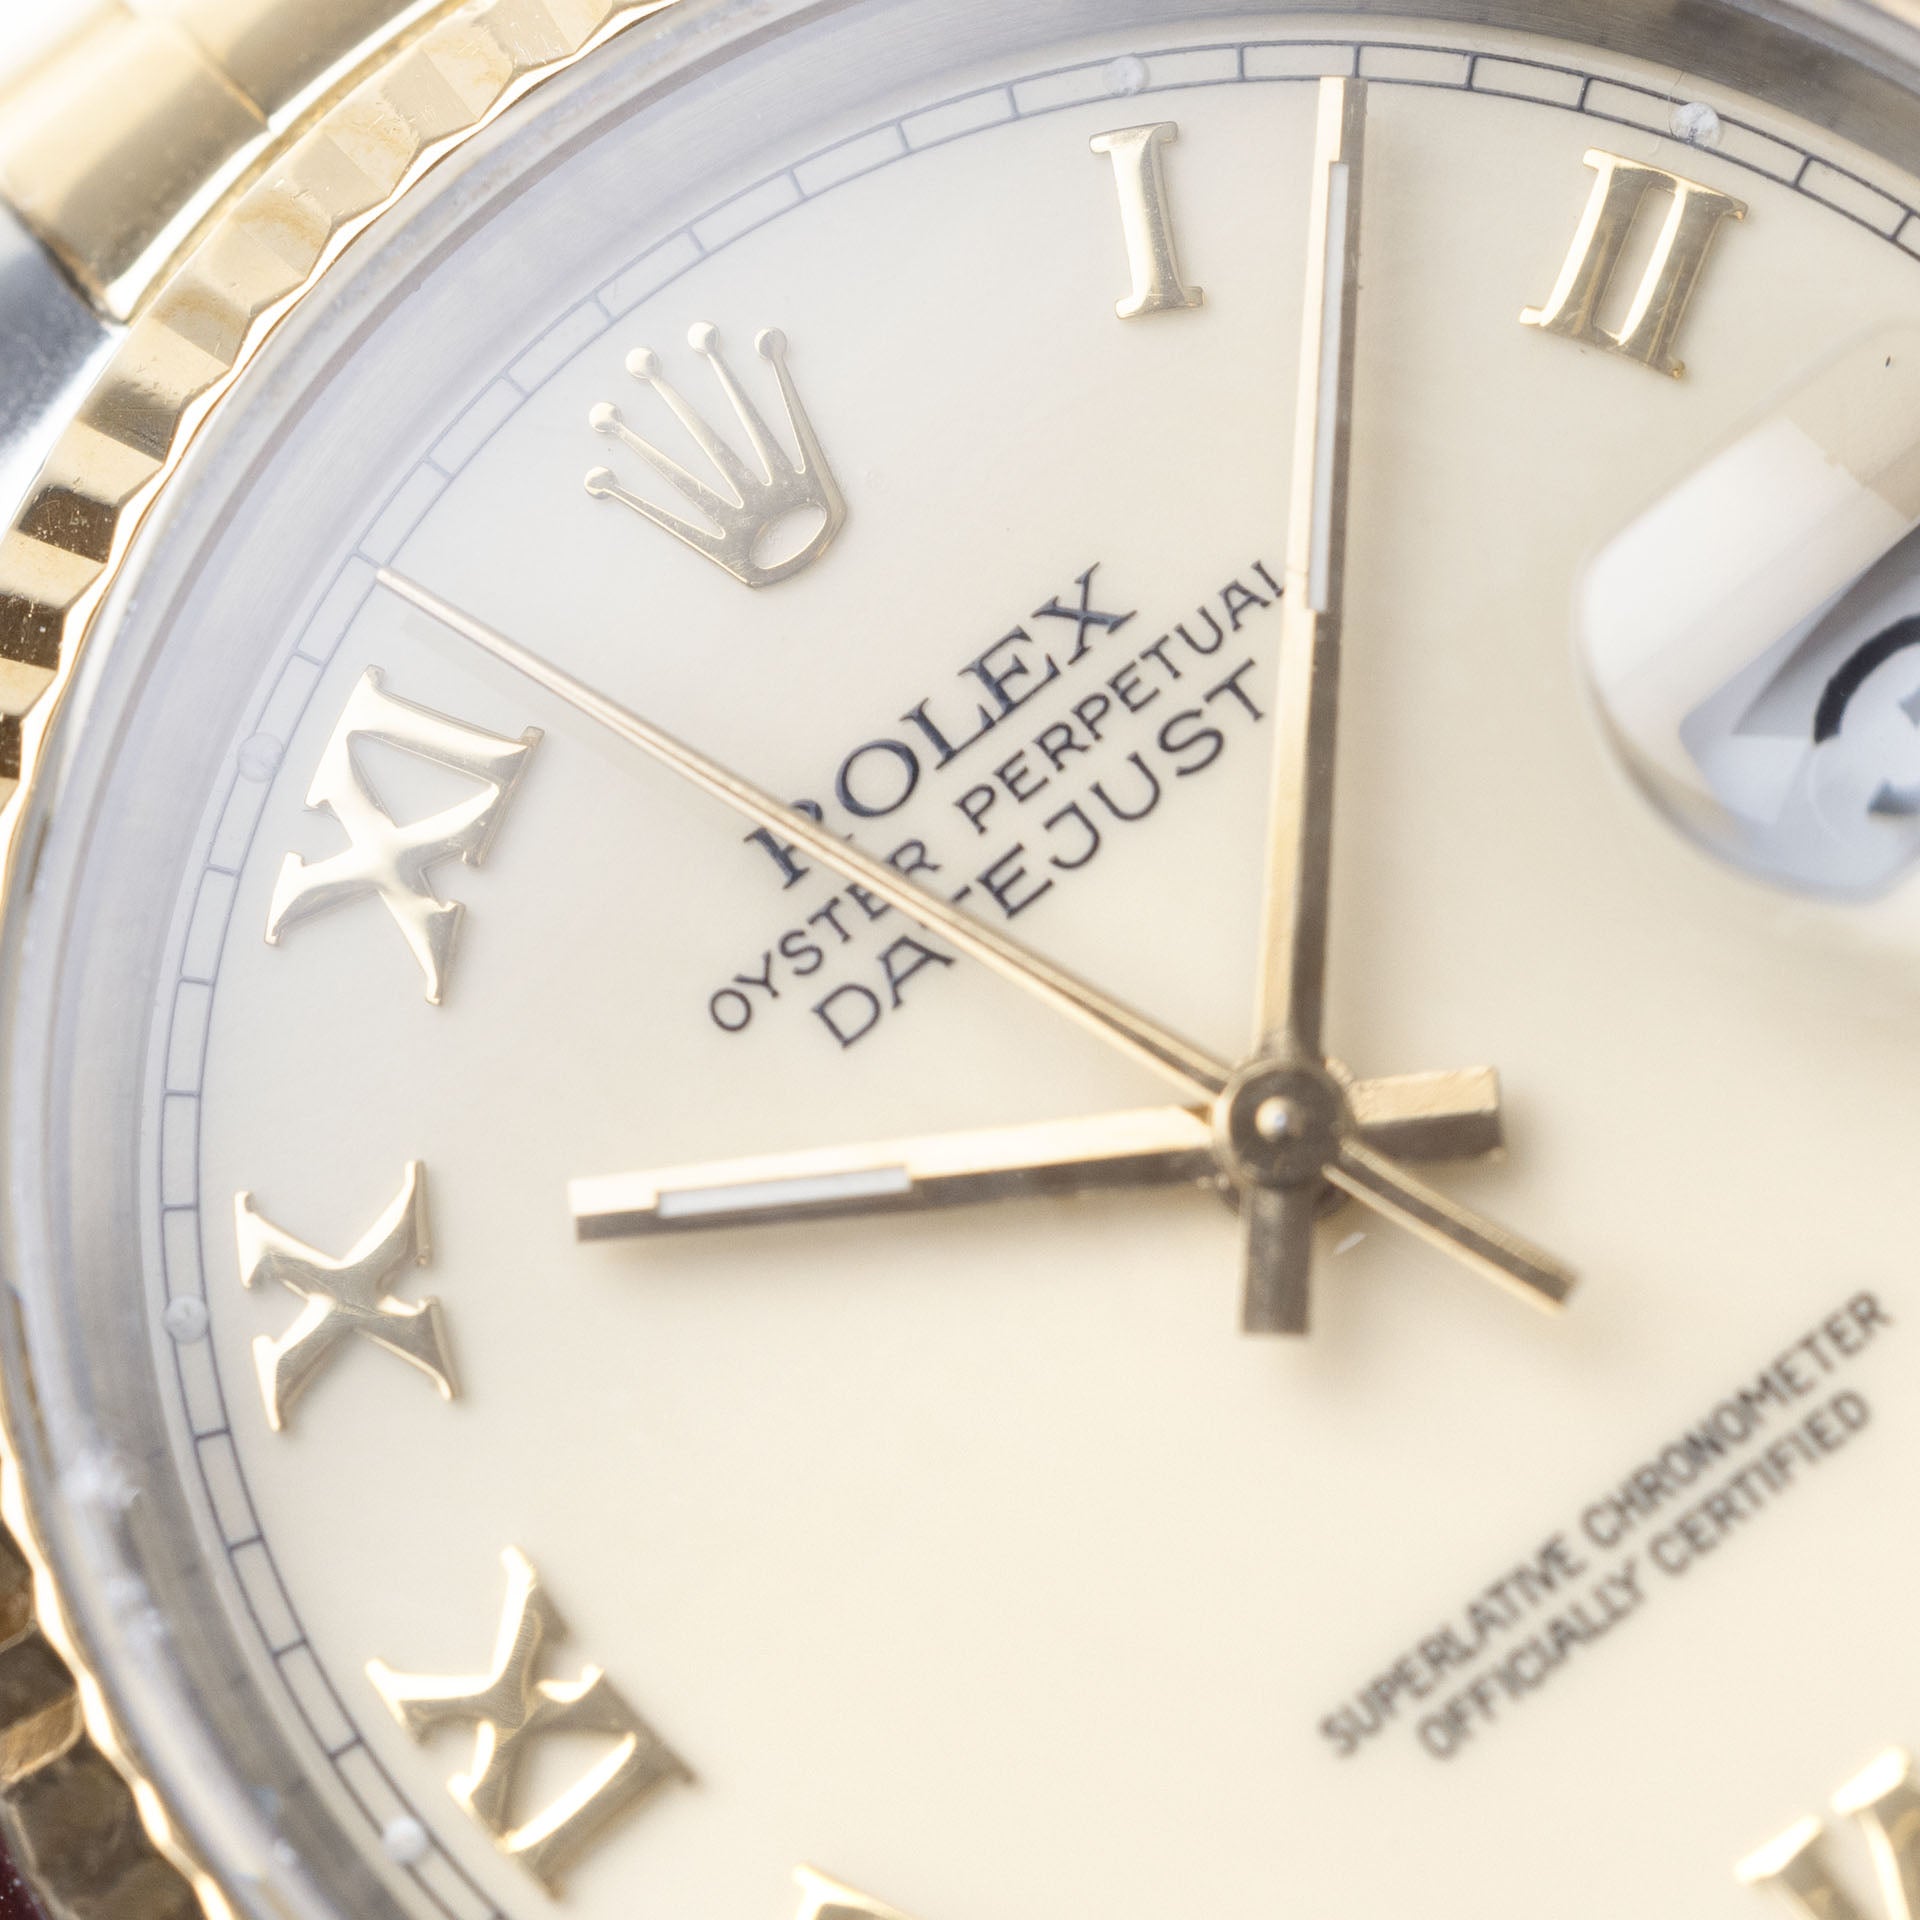 Rolex Datejust Cream dial steel gold ref 16233